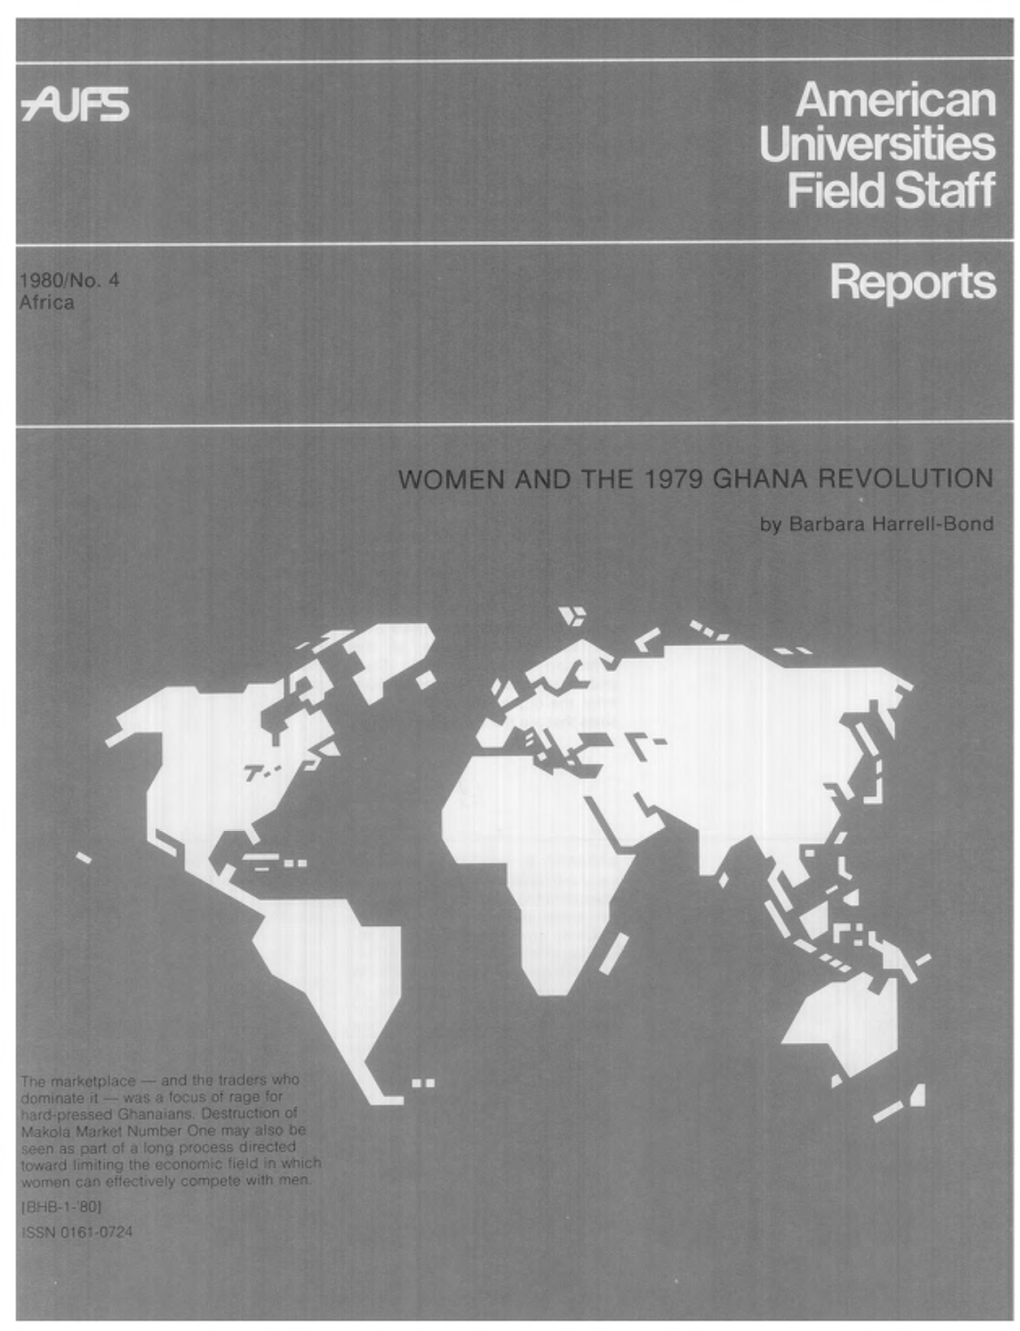 Women and the 1979 Ghana Revolution